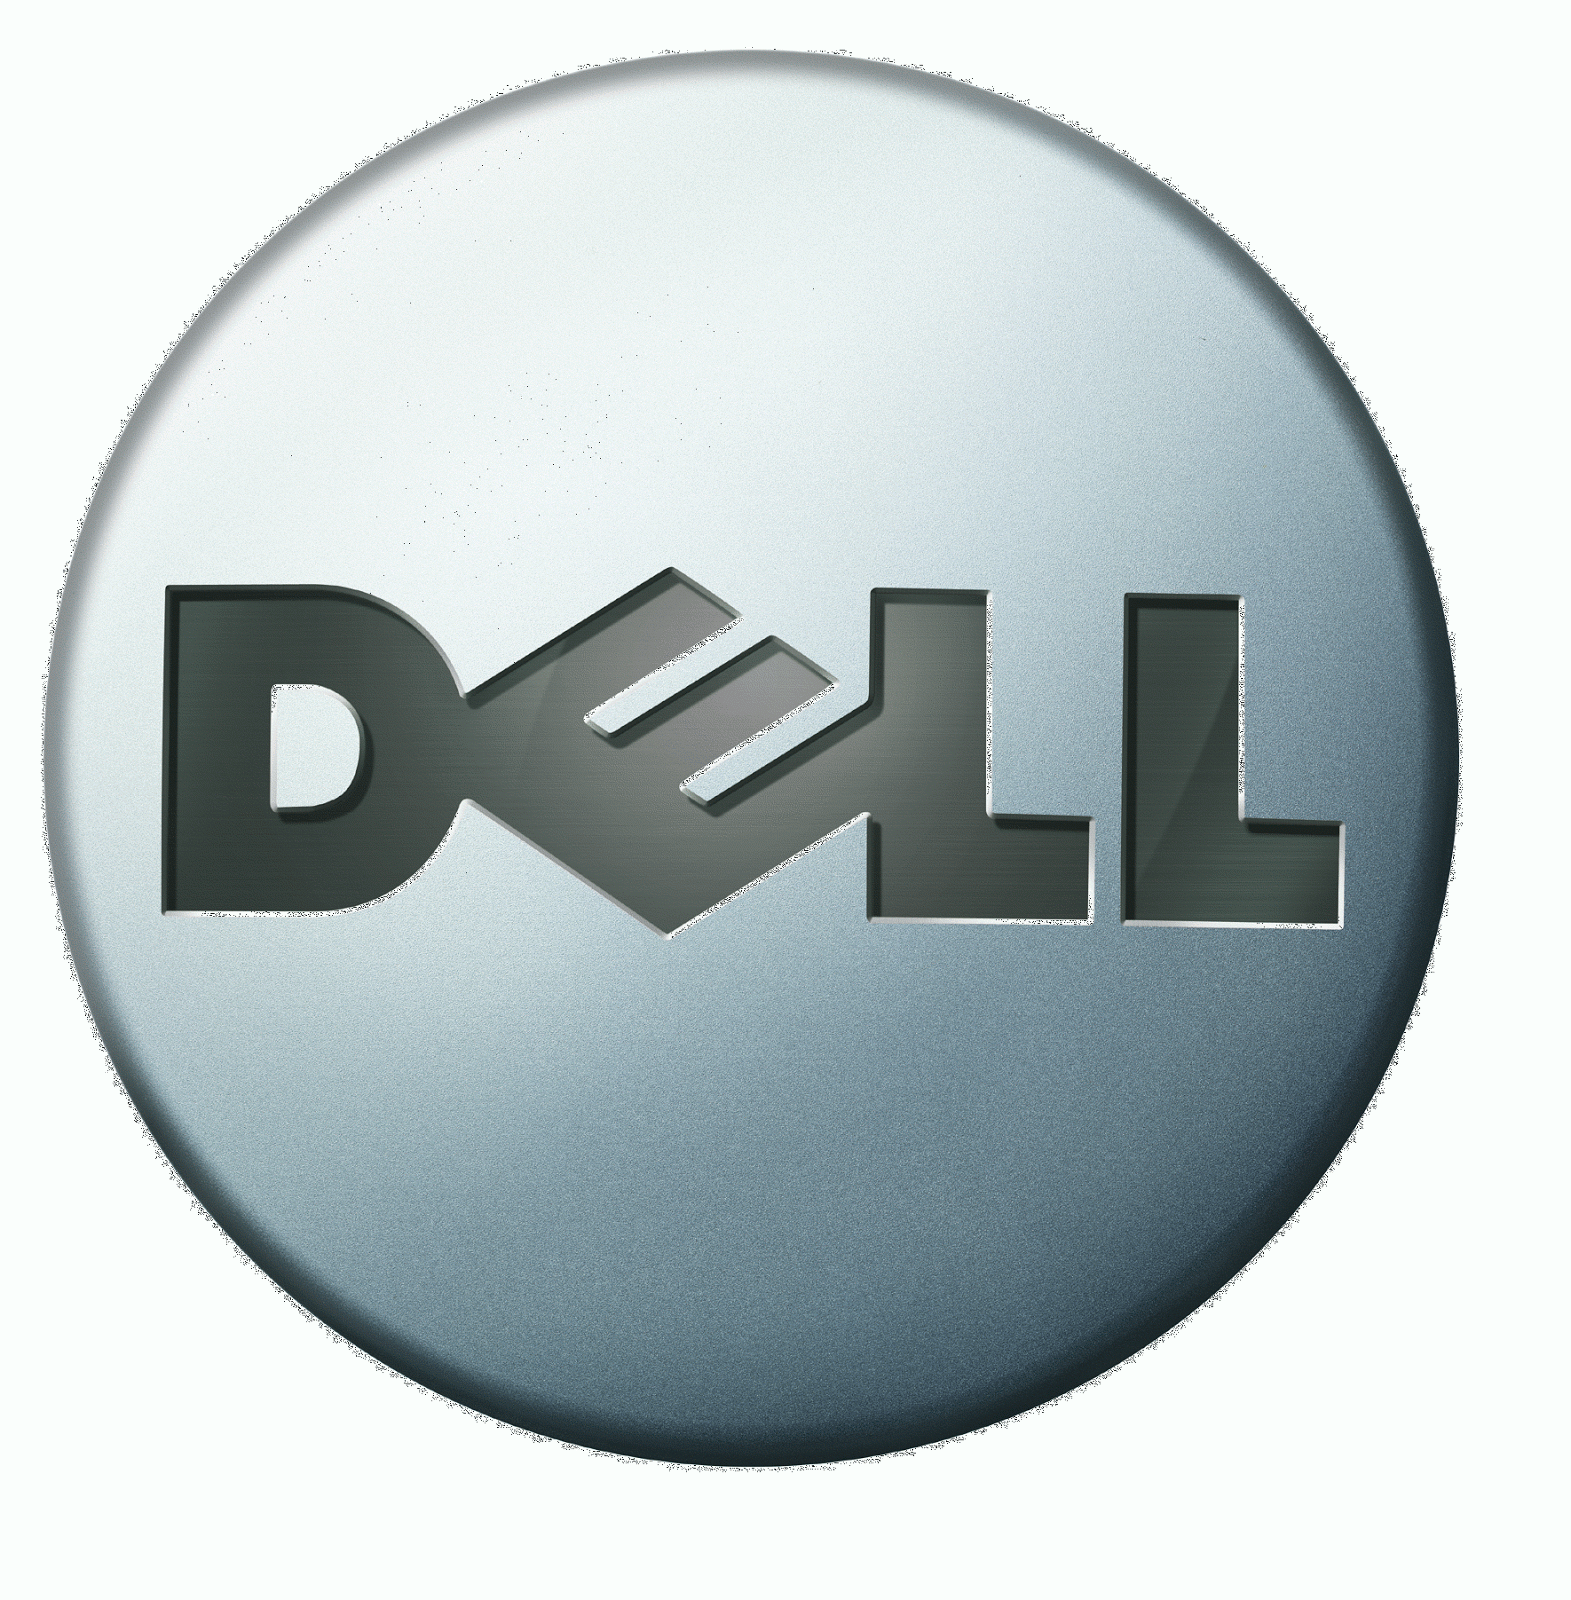 Dell Wallpaper HD. All HD Wallpaper